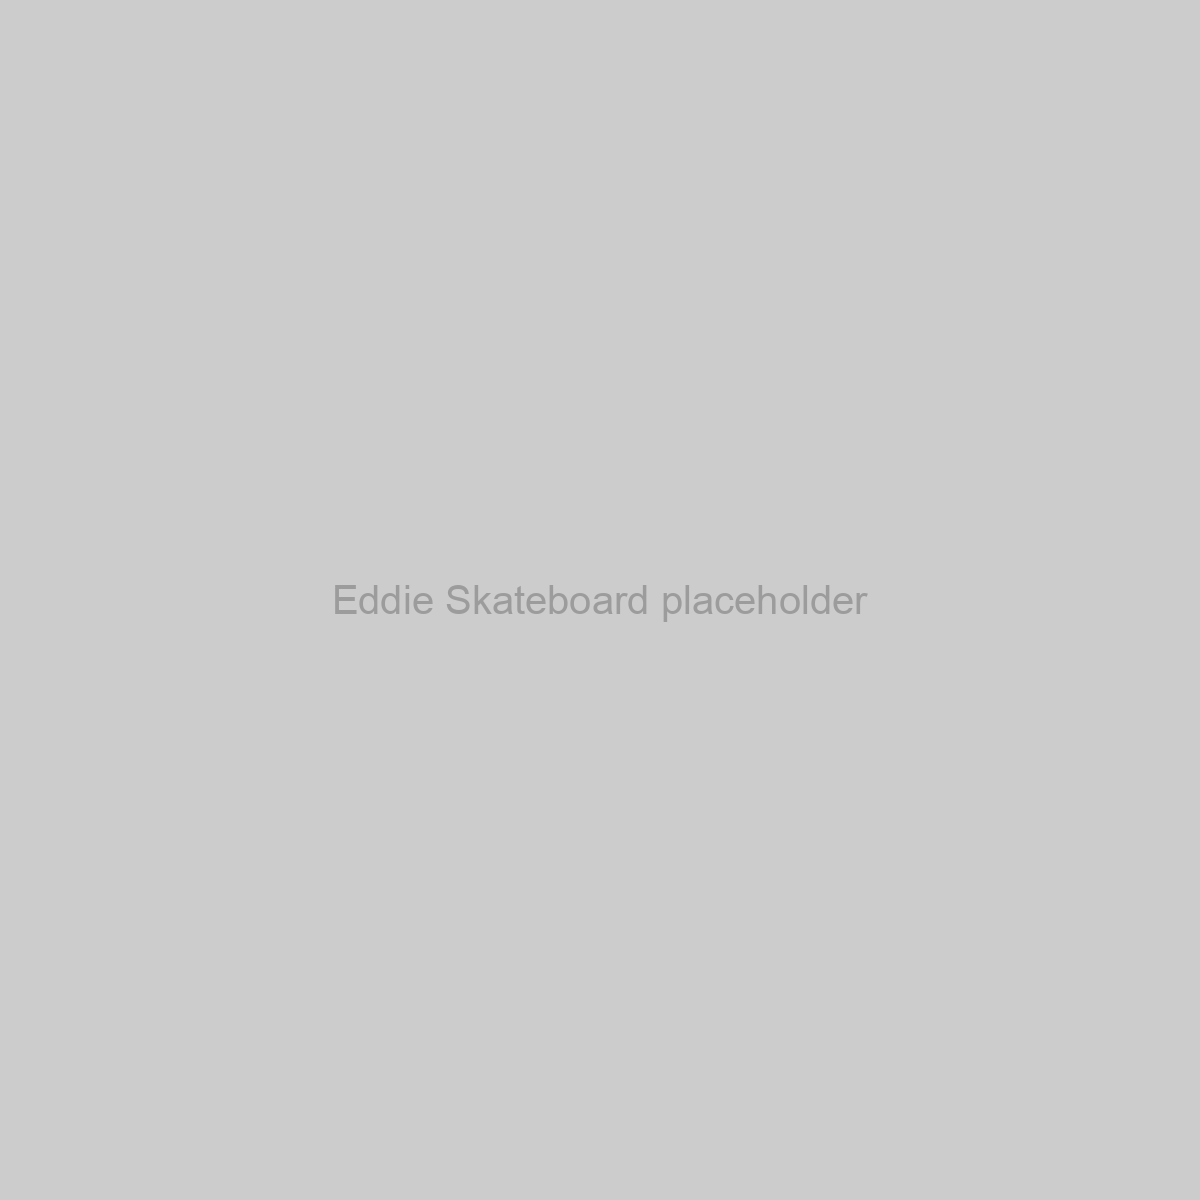 Eddie Skateboard Placeholder Image